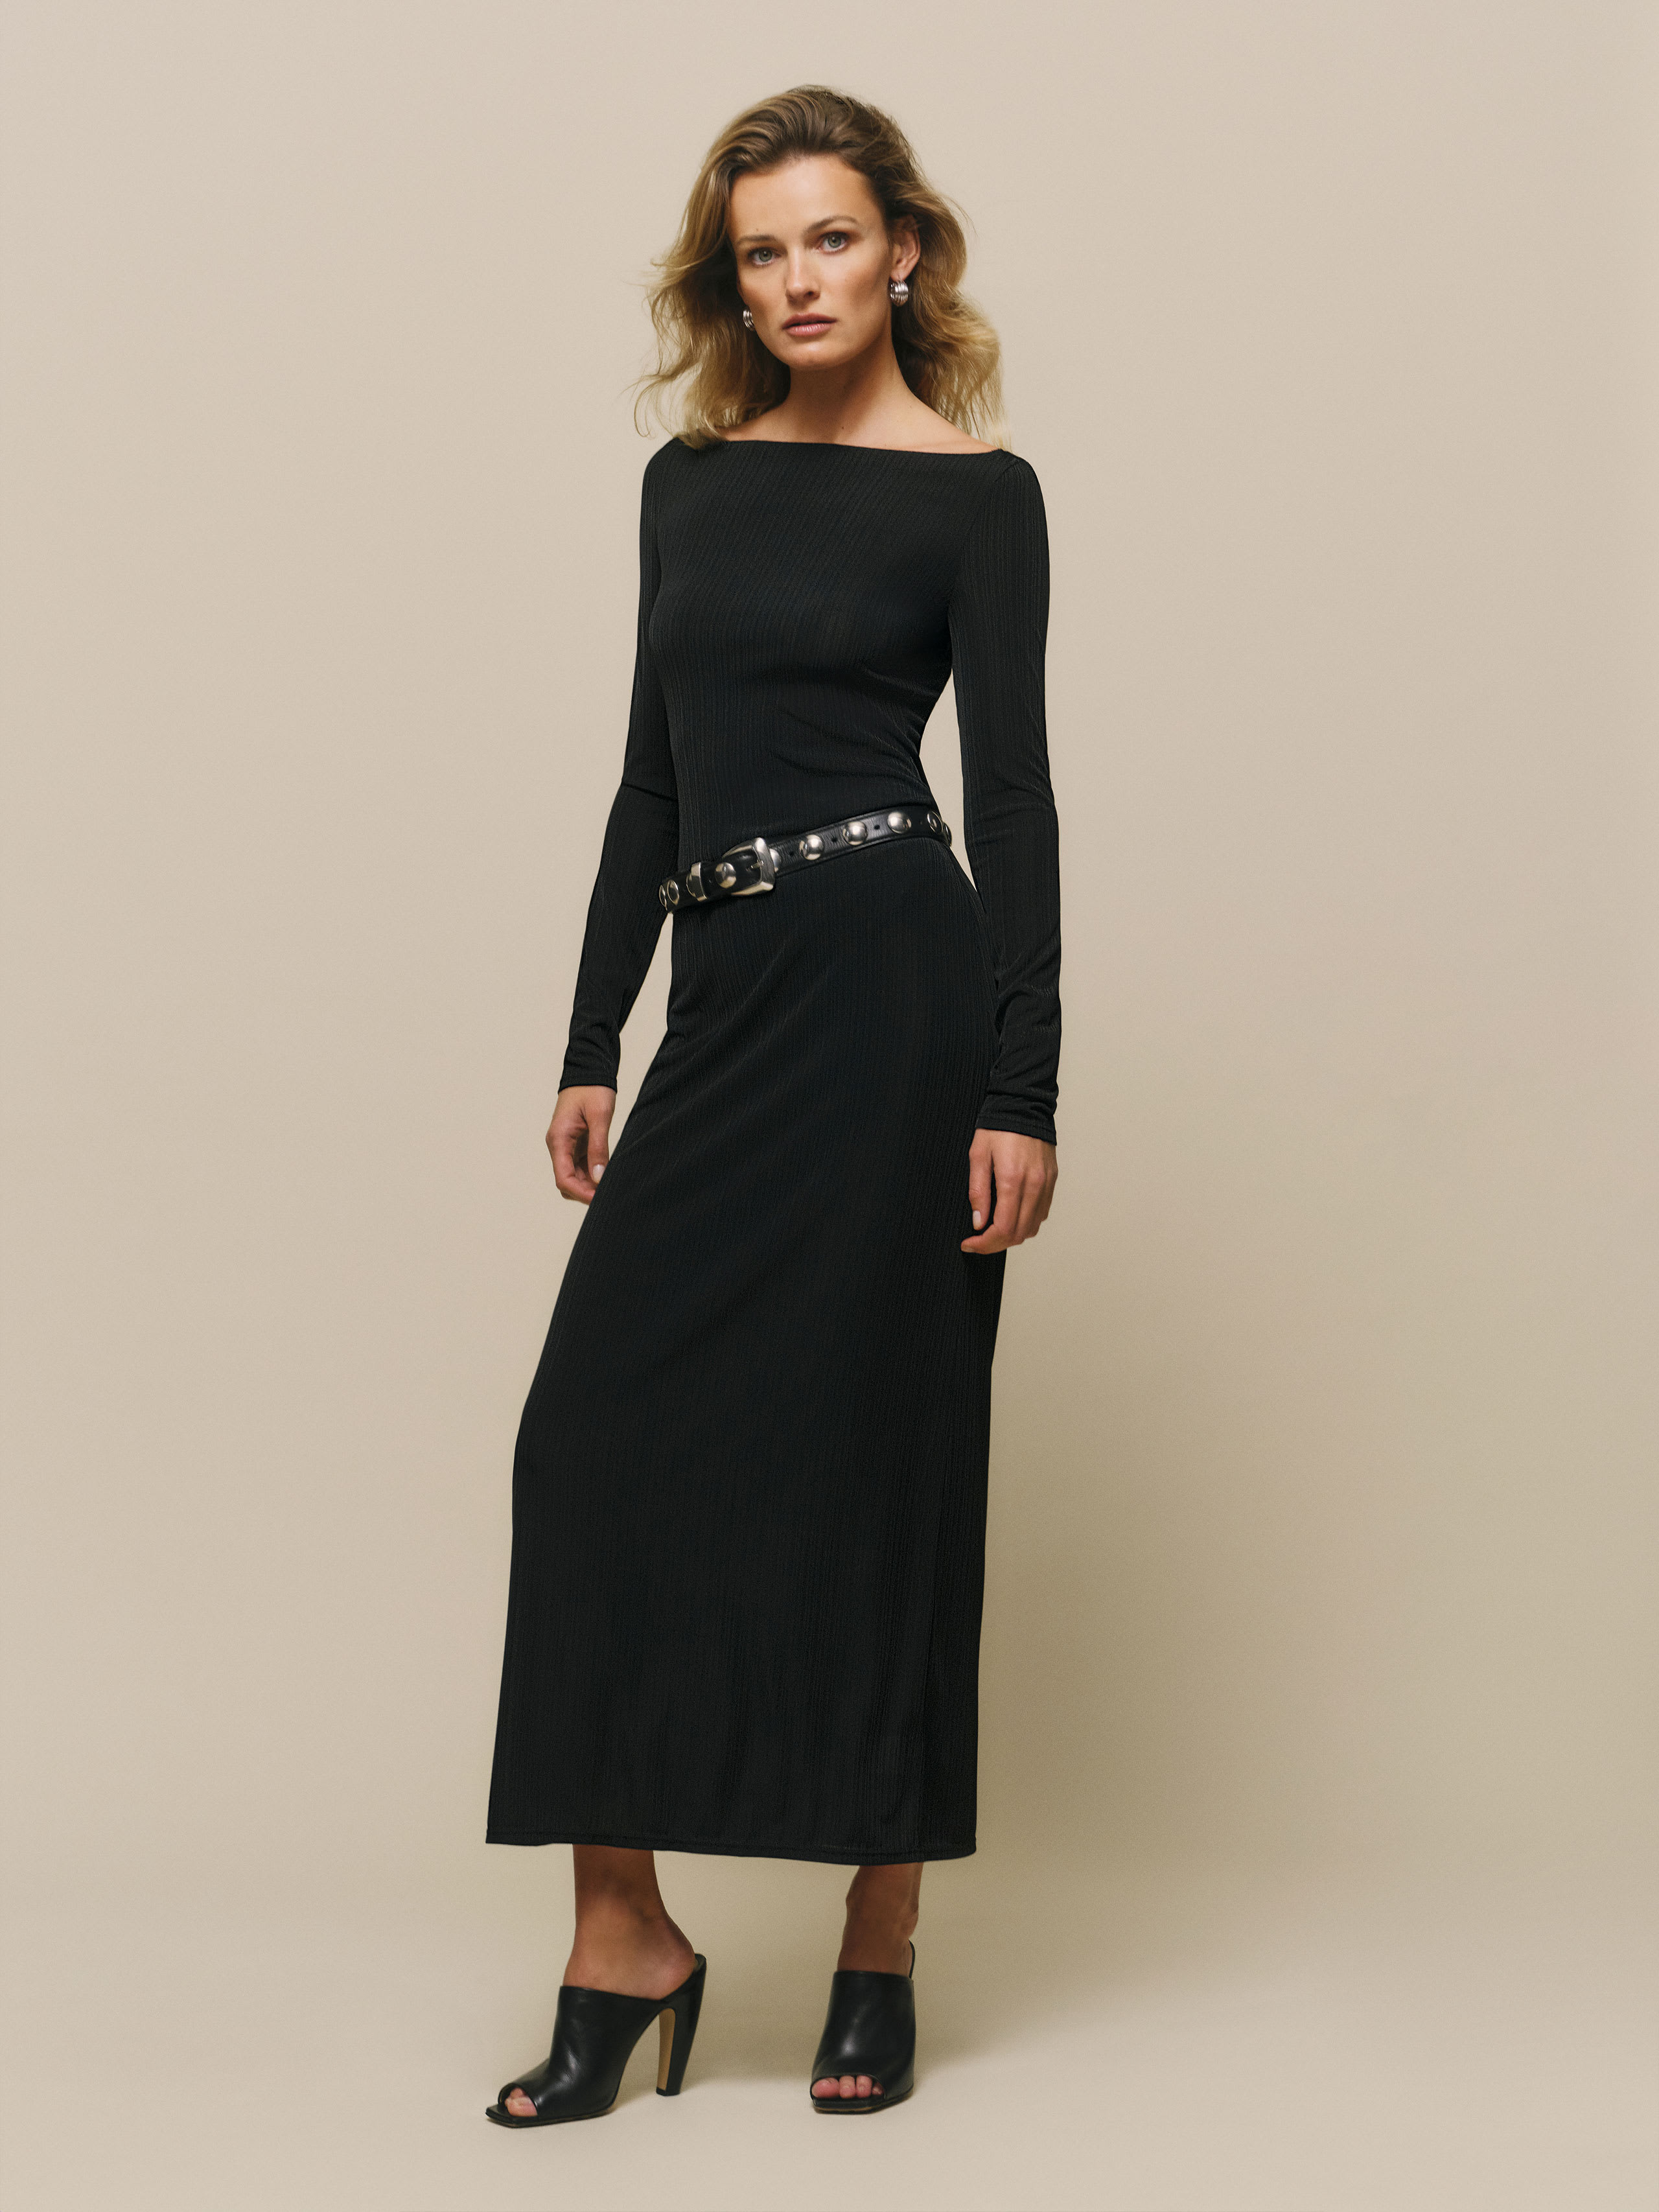 Reformation Zoya Knit Dress In Black